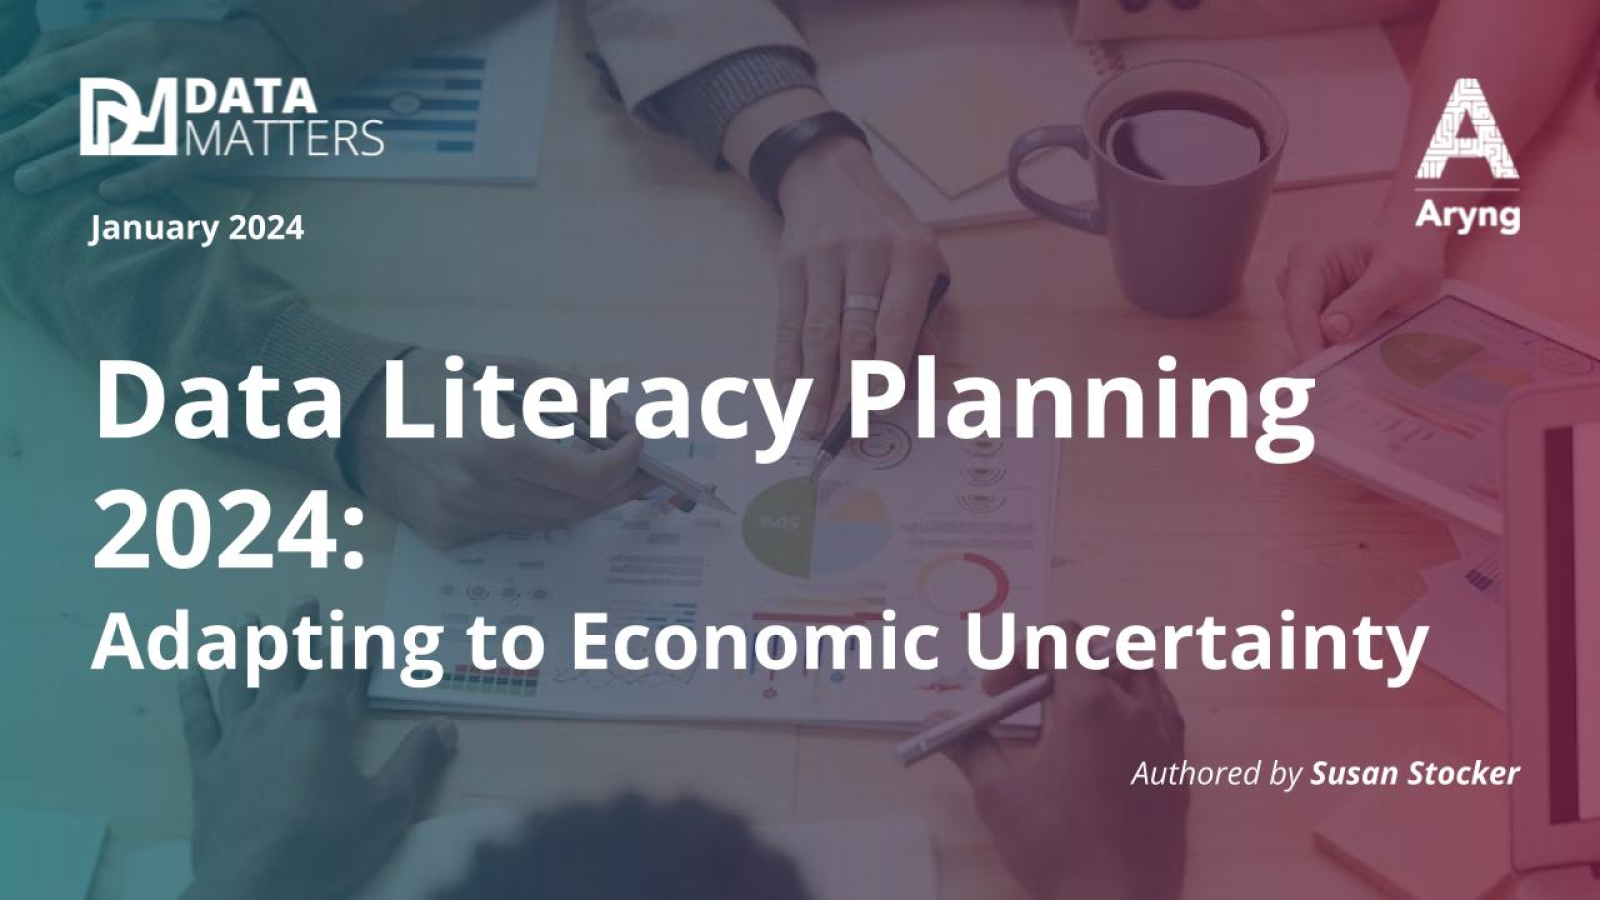 Data literacy planning 2024